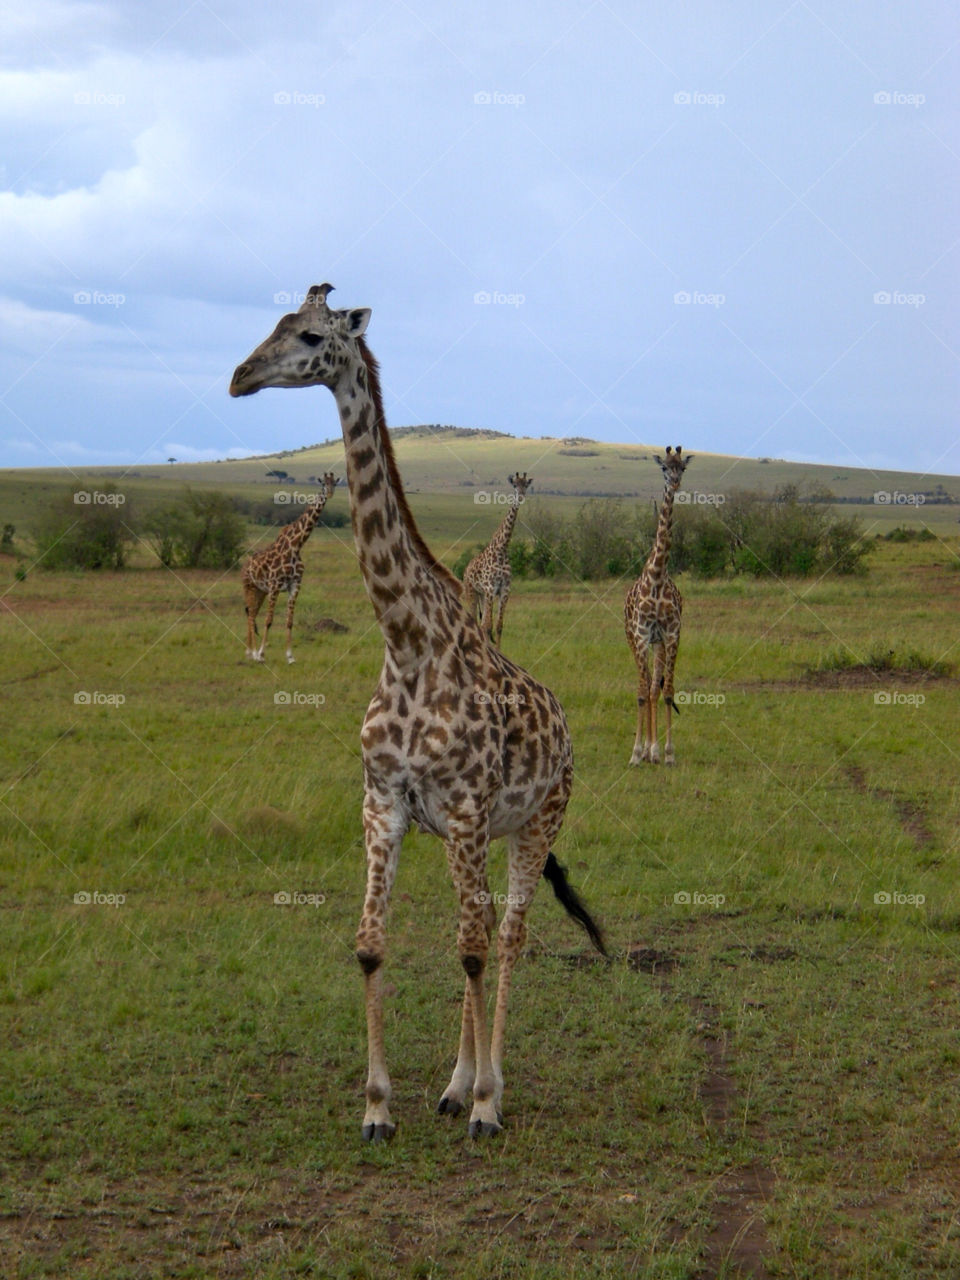 mammals animals kenya giraffes by trvldeb07